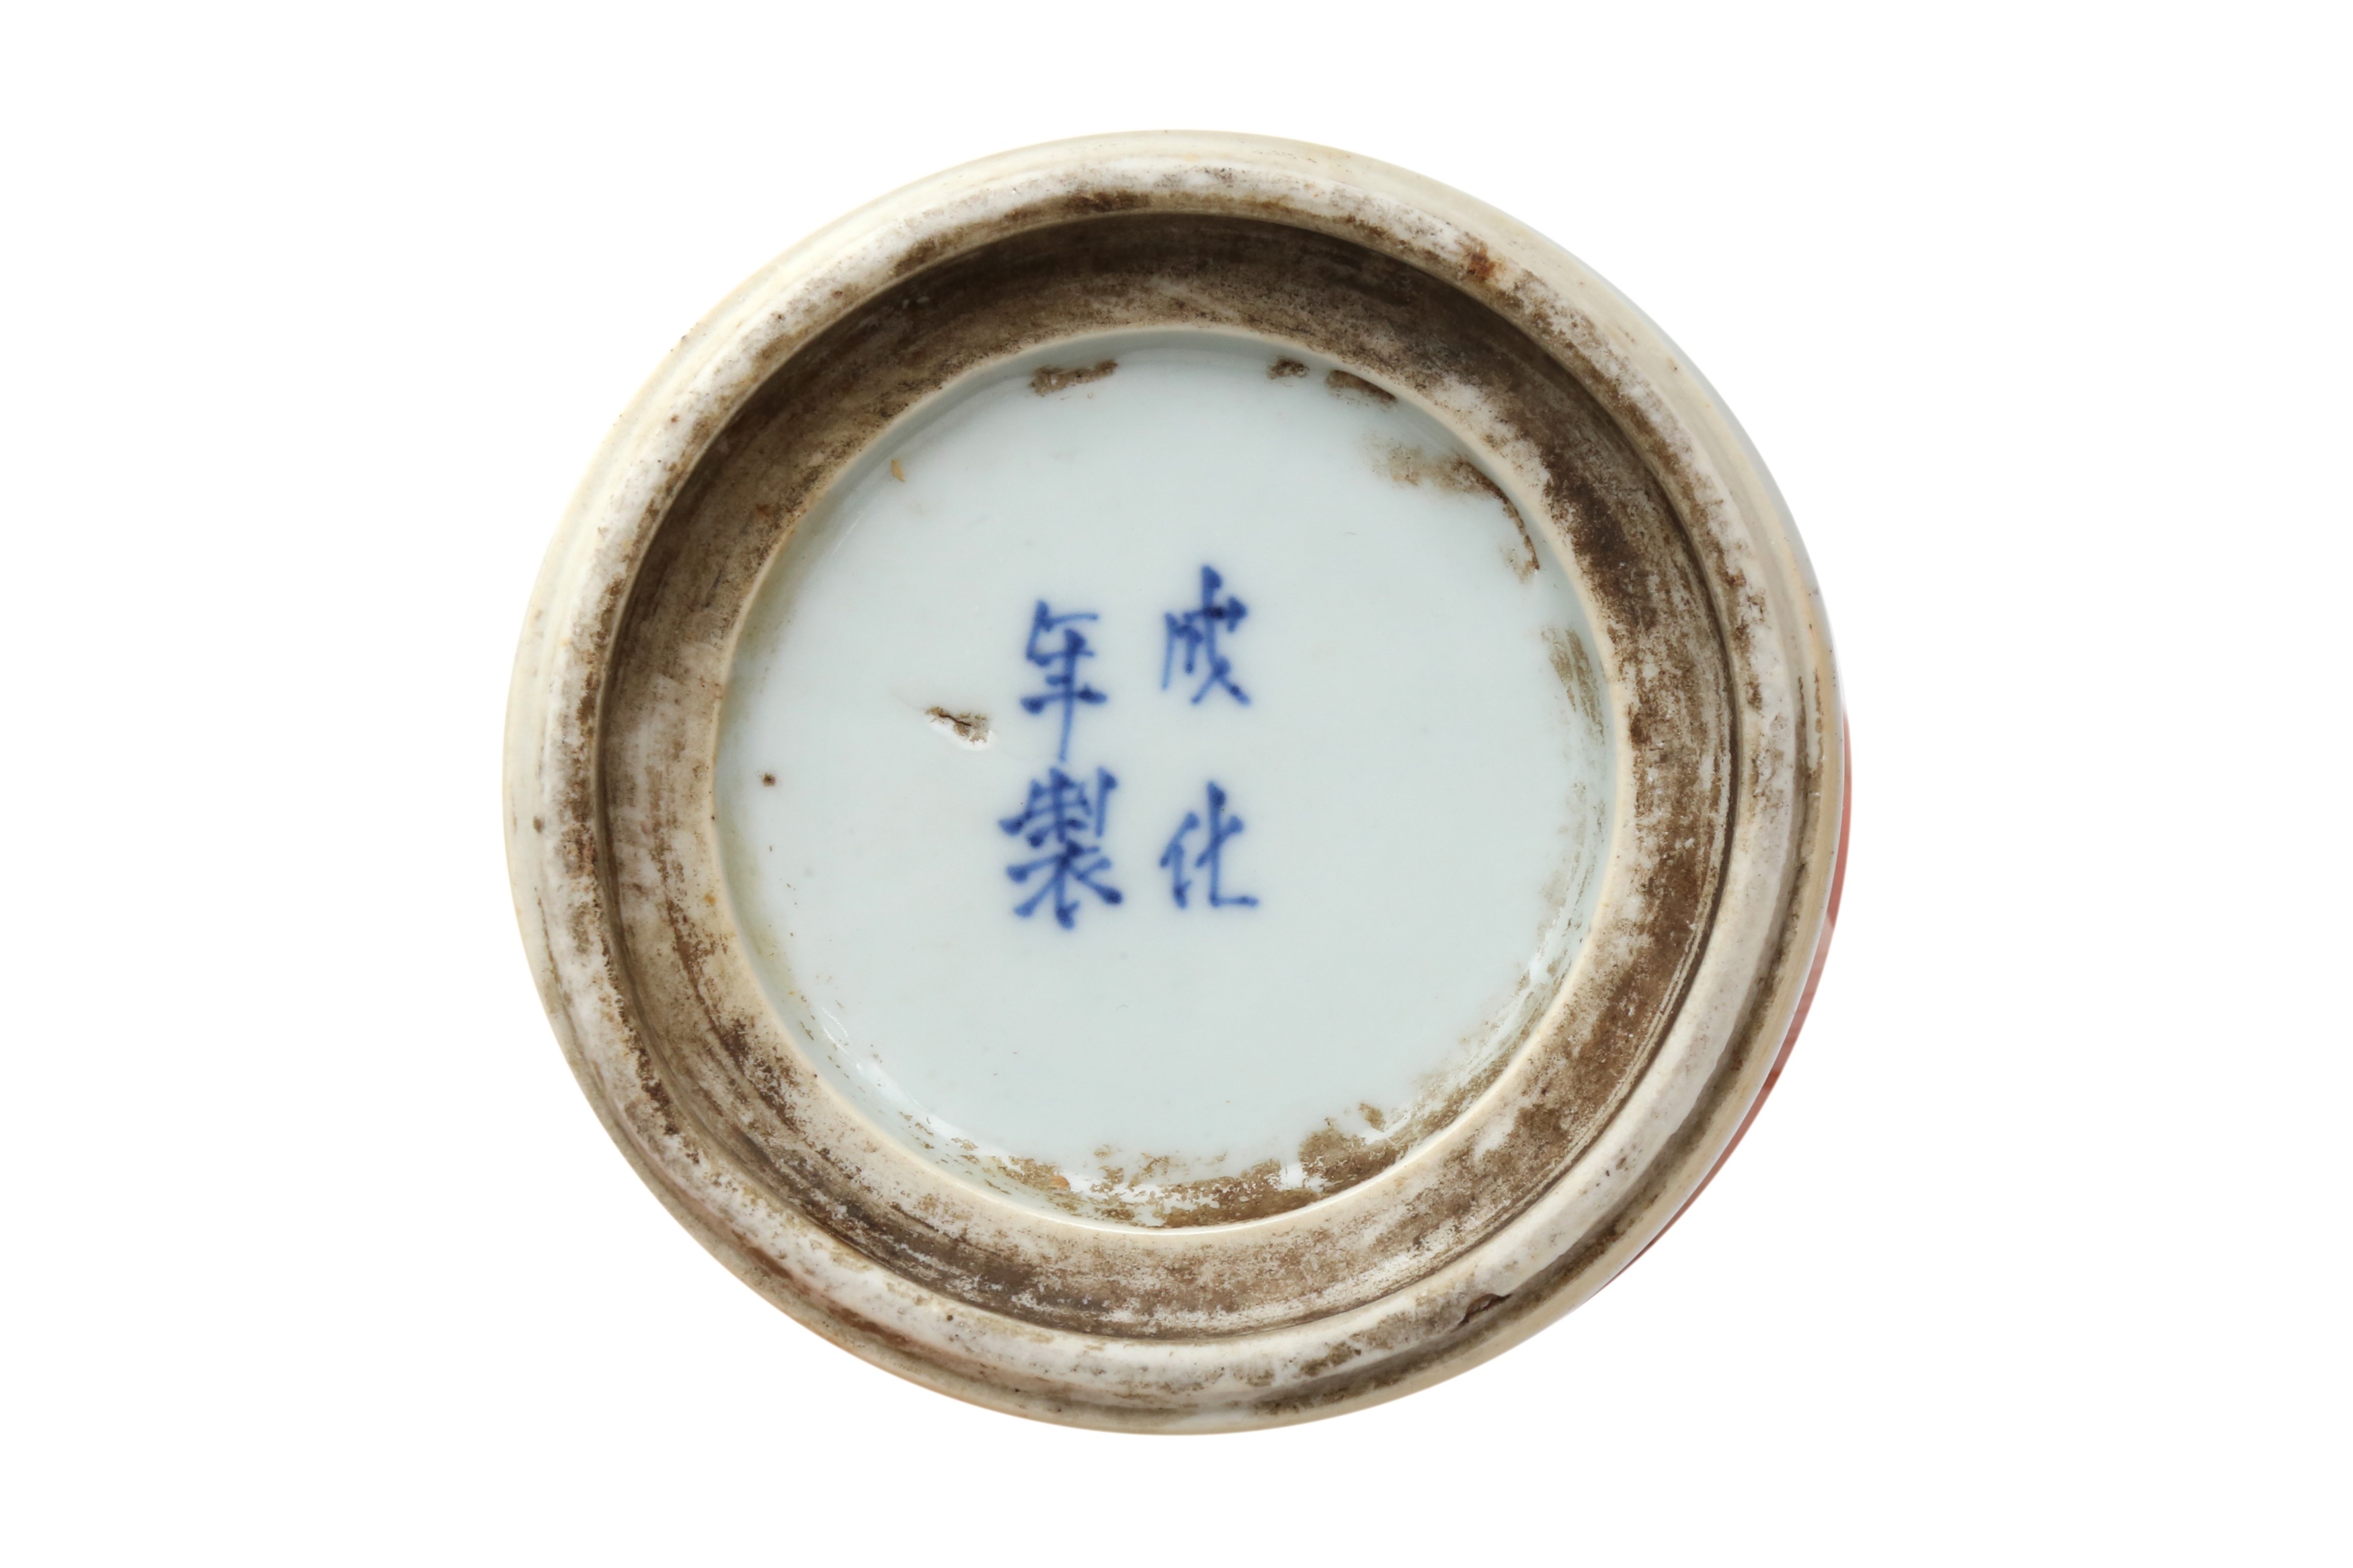 A CHINESE BLUE AND WHITE FIGURATIVE VASE 過渡期 約1628年 青花人物故事賦圖詩文瓶 《成化年製》款 - Image 3 of 26